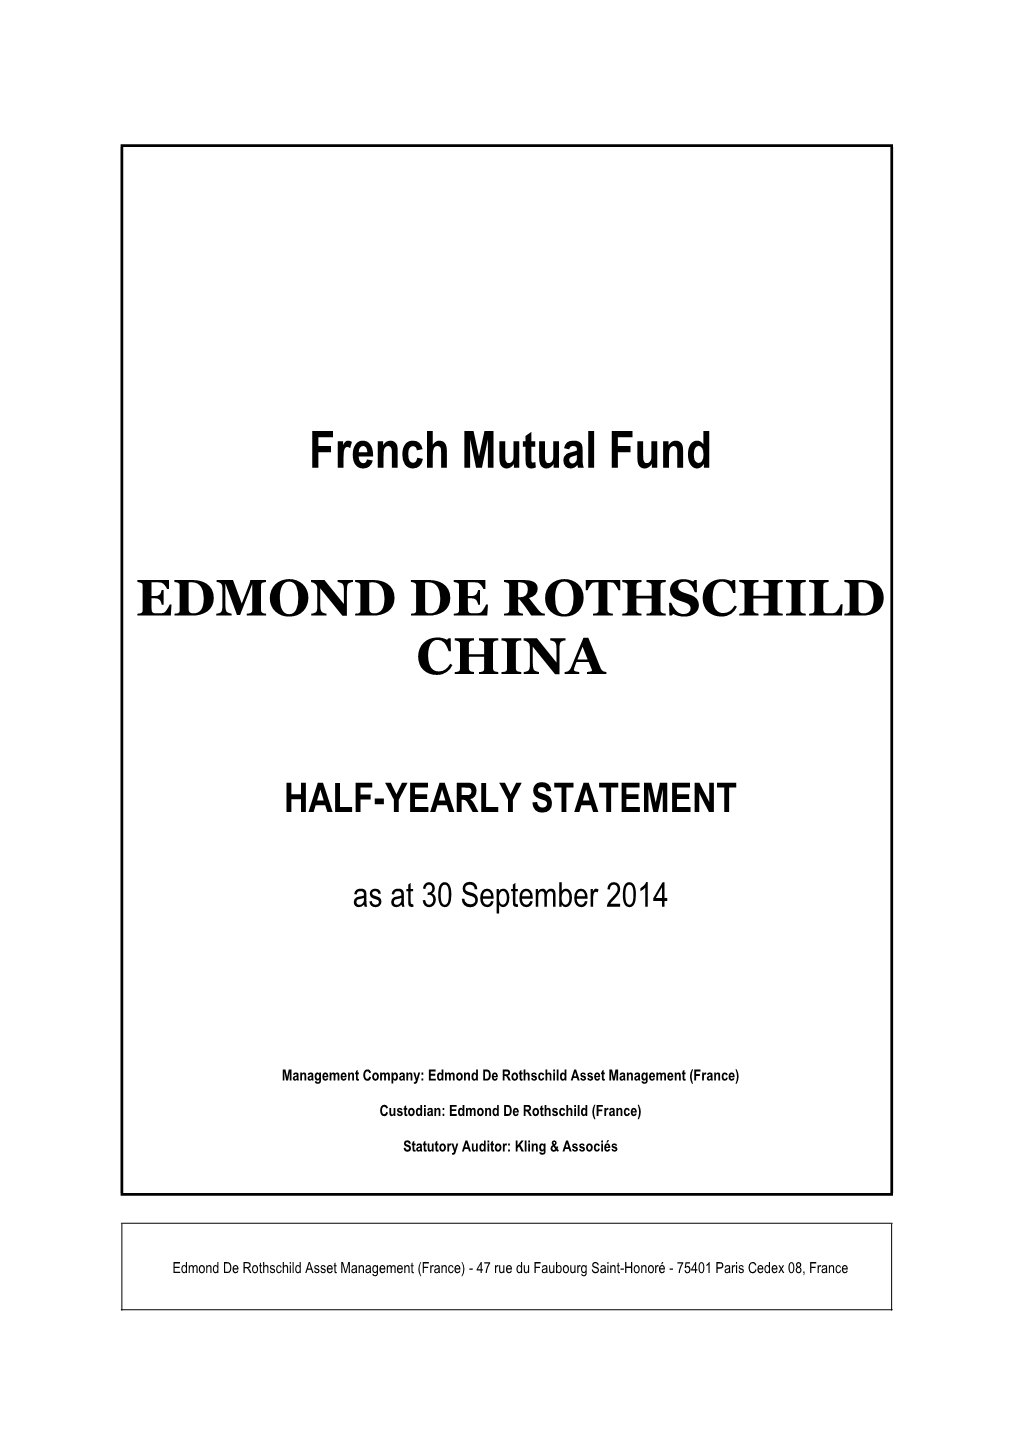 French Mutual Fund EDMOND DE ROTHSCHILD CHINA